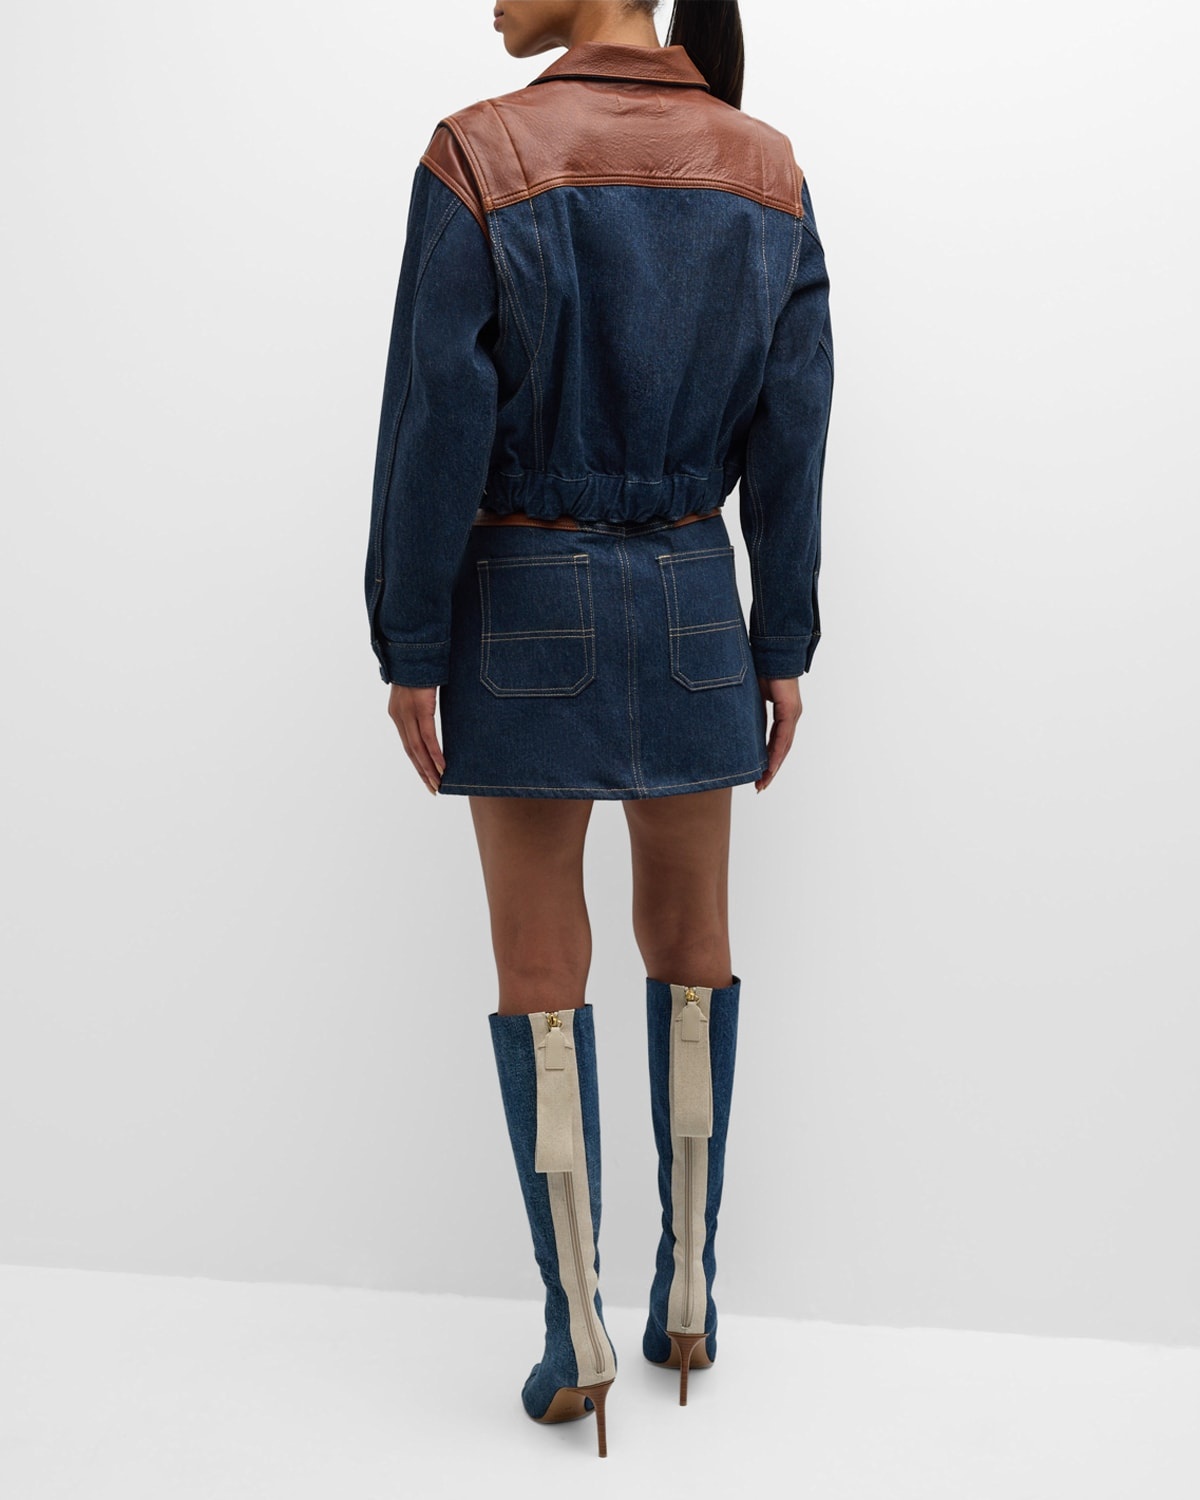 Atelier Denim and Leather Mini Skirt - 4